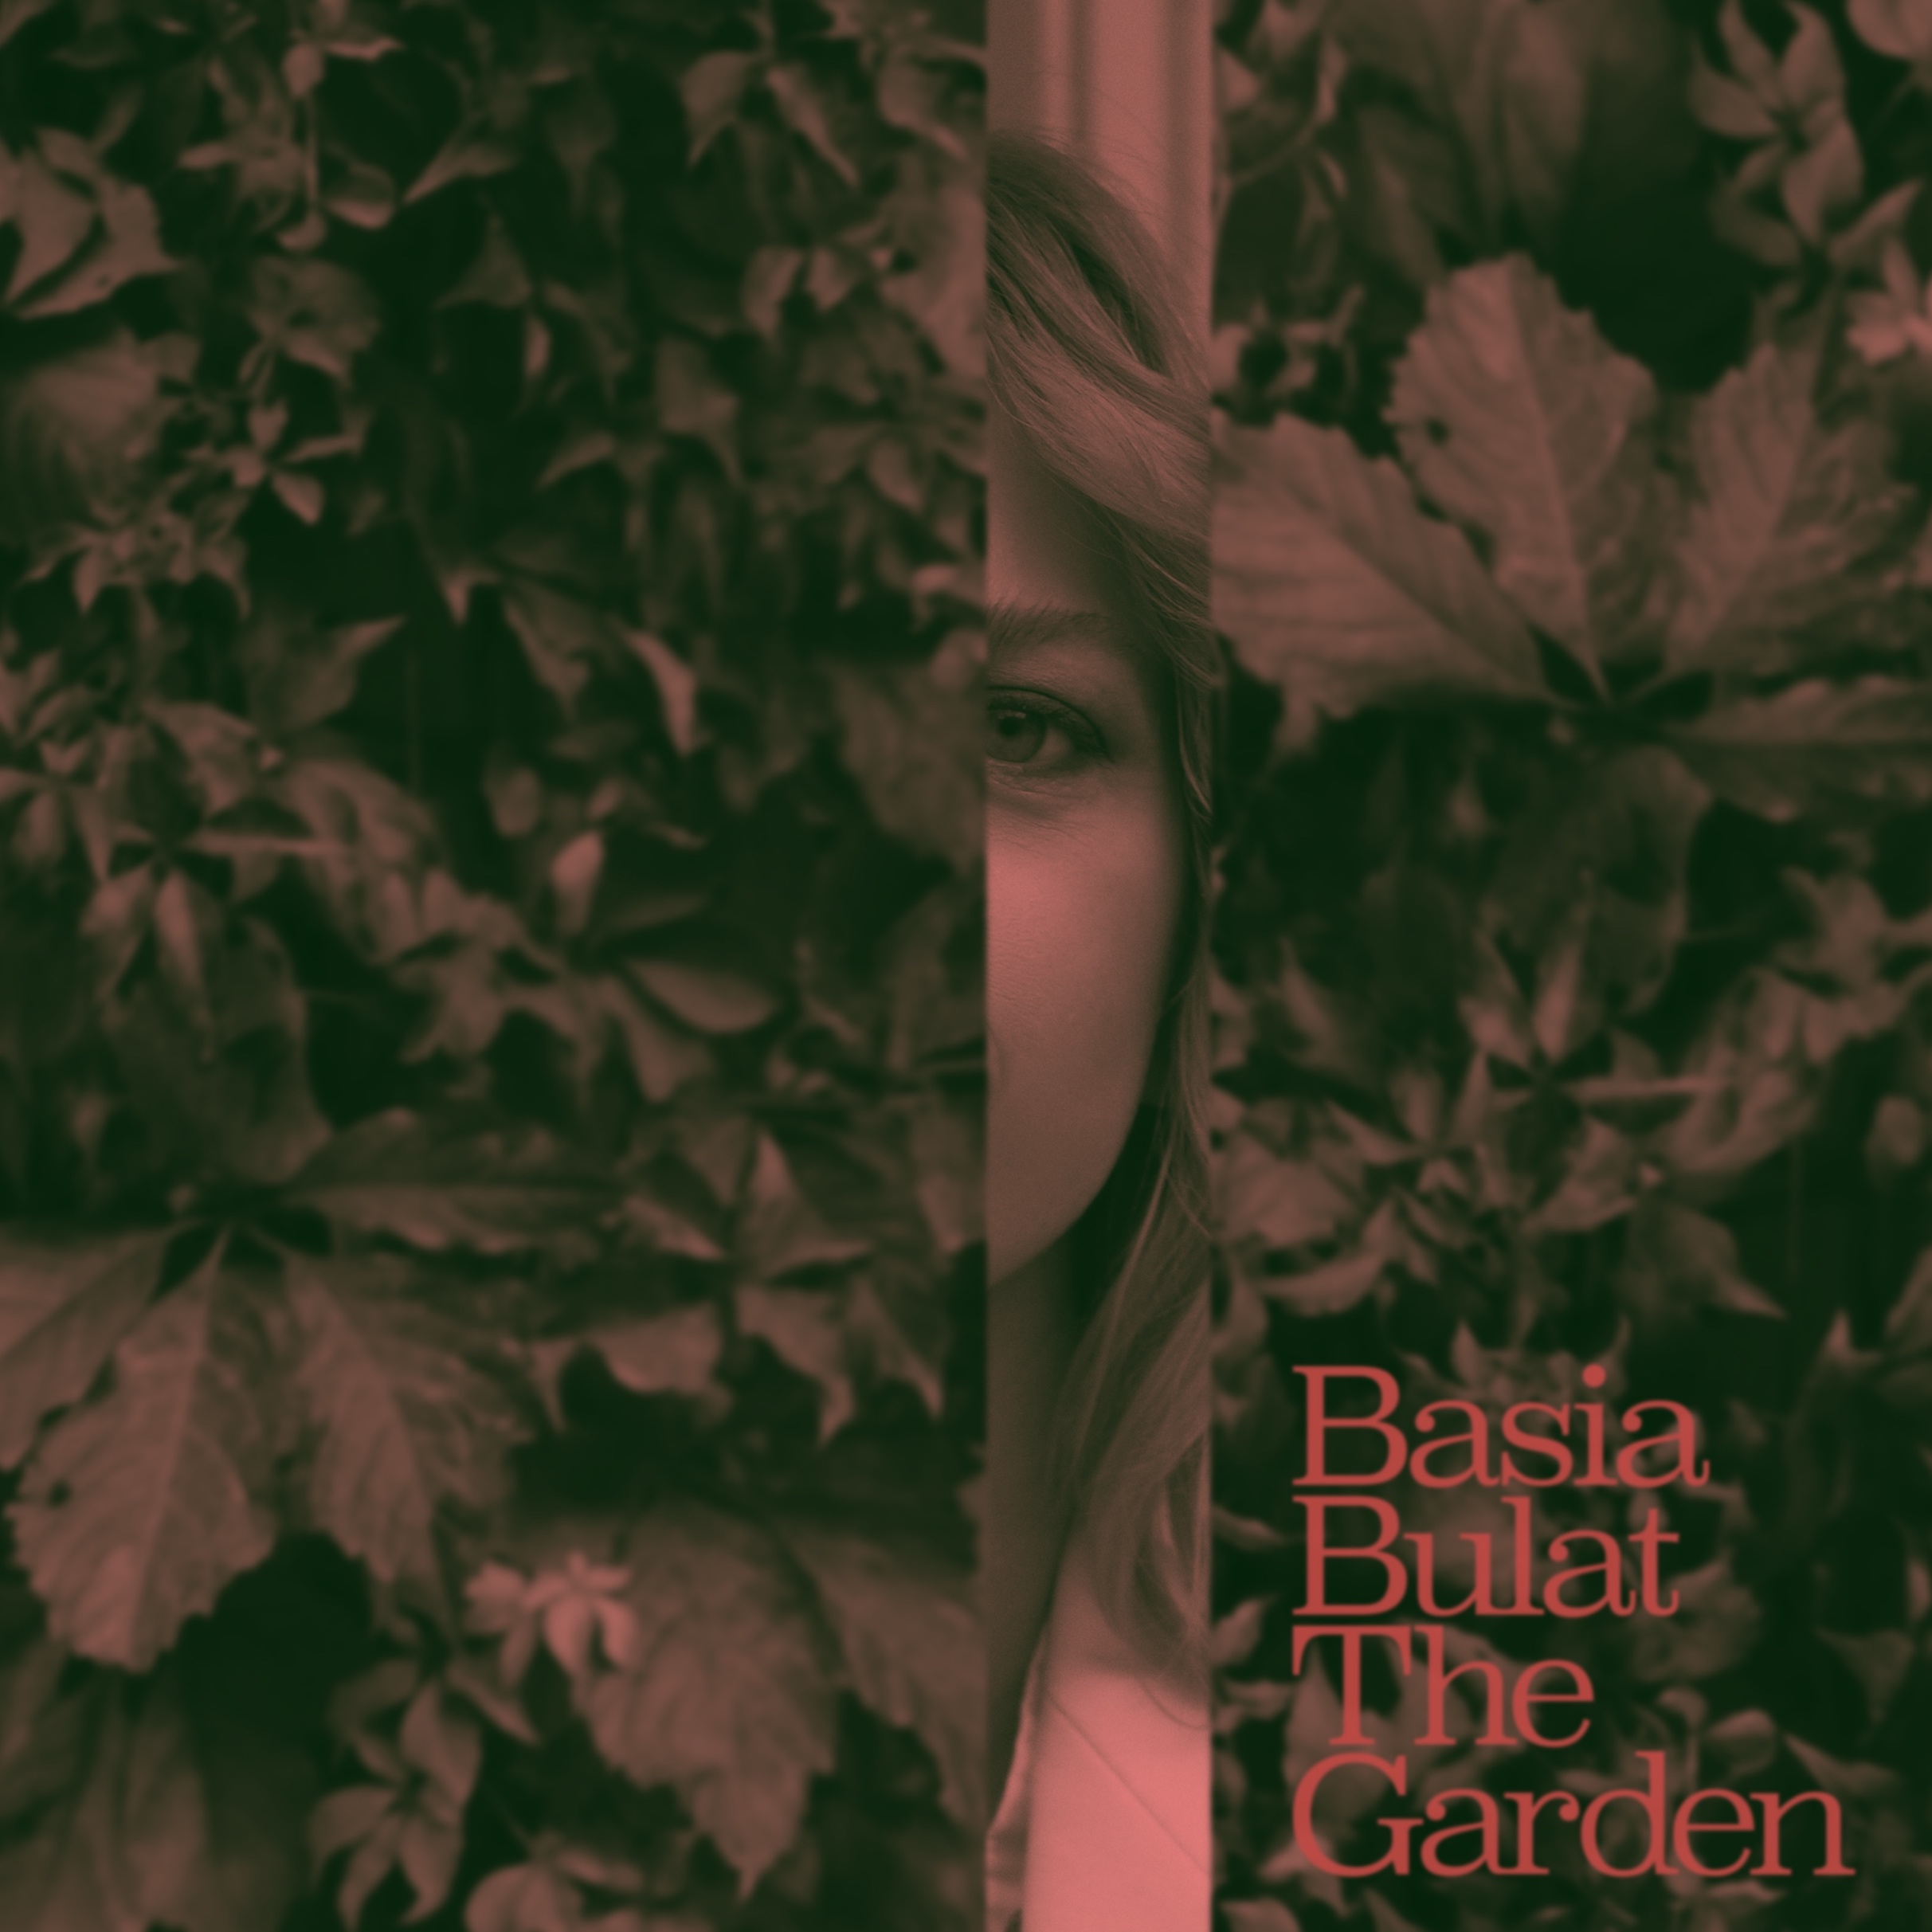 Basia Bulat The Garden artwork